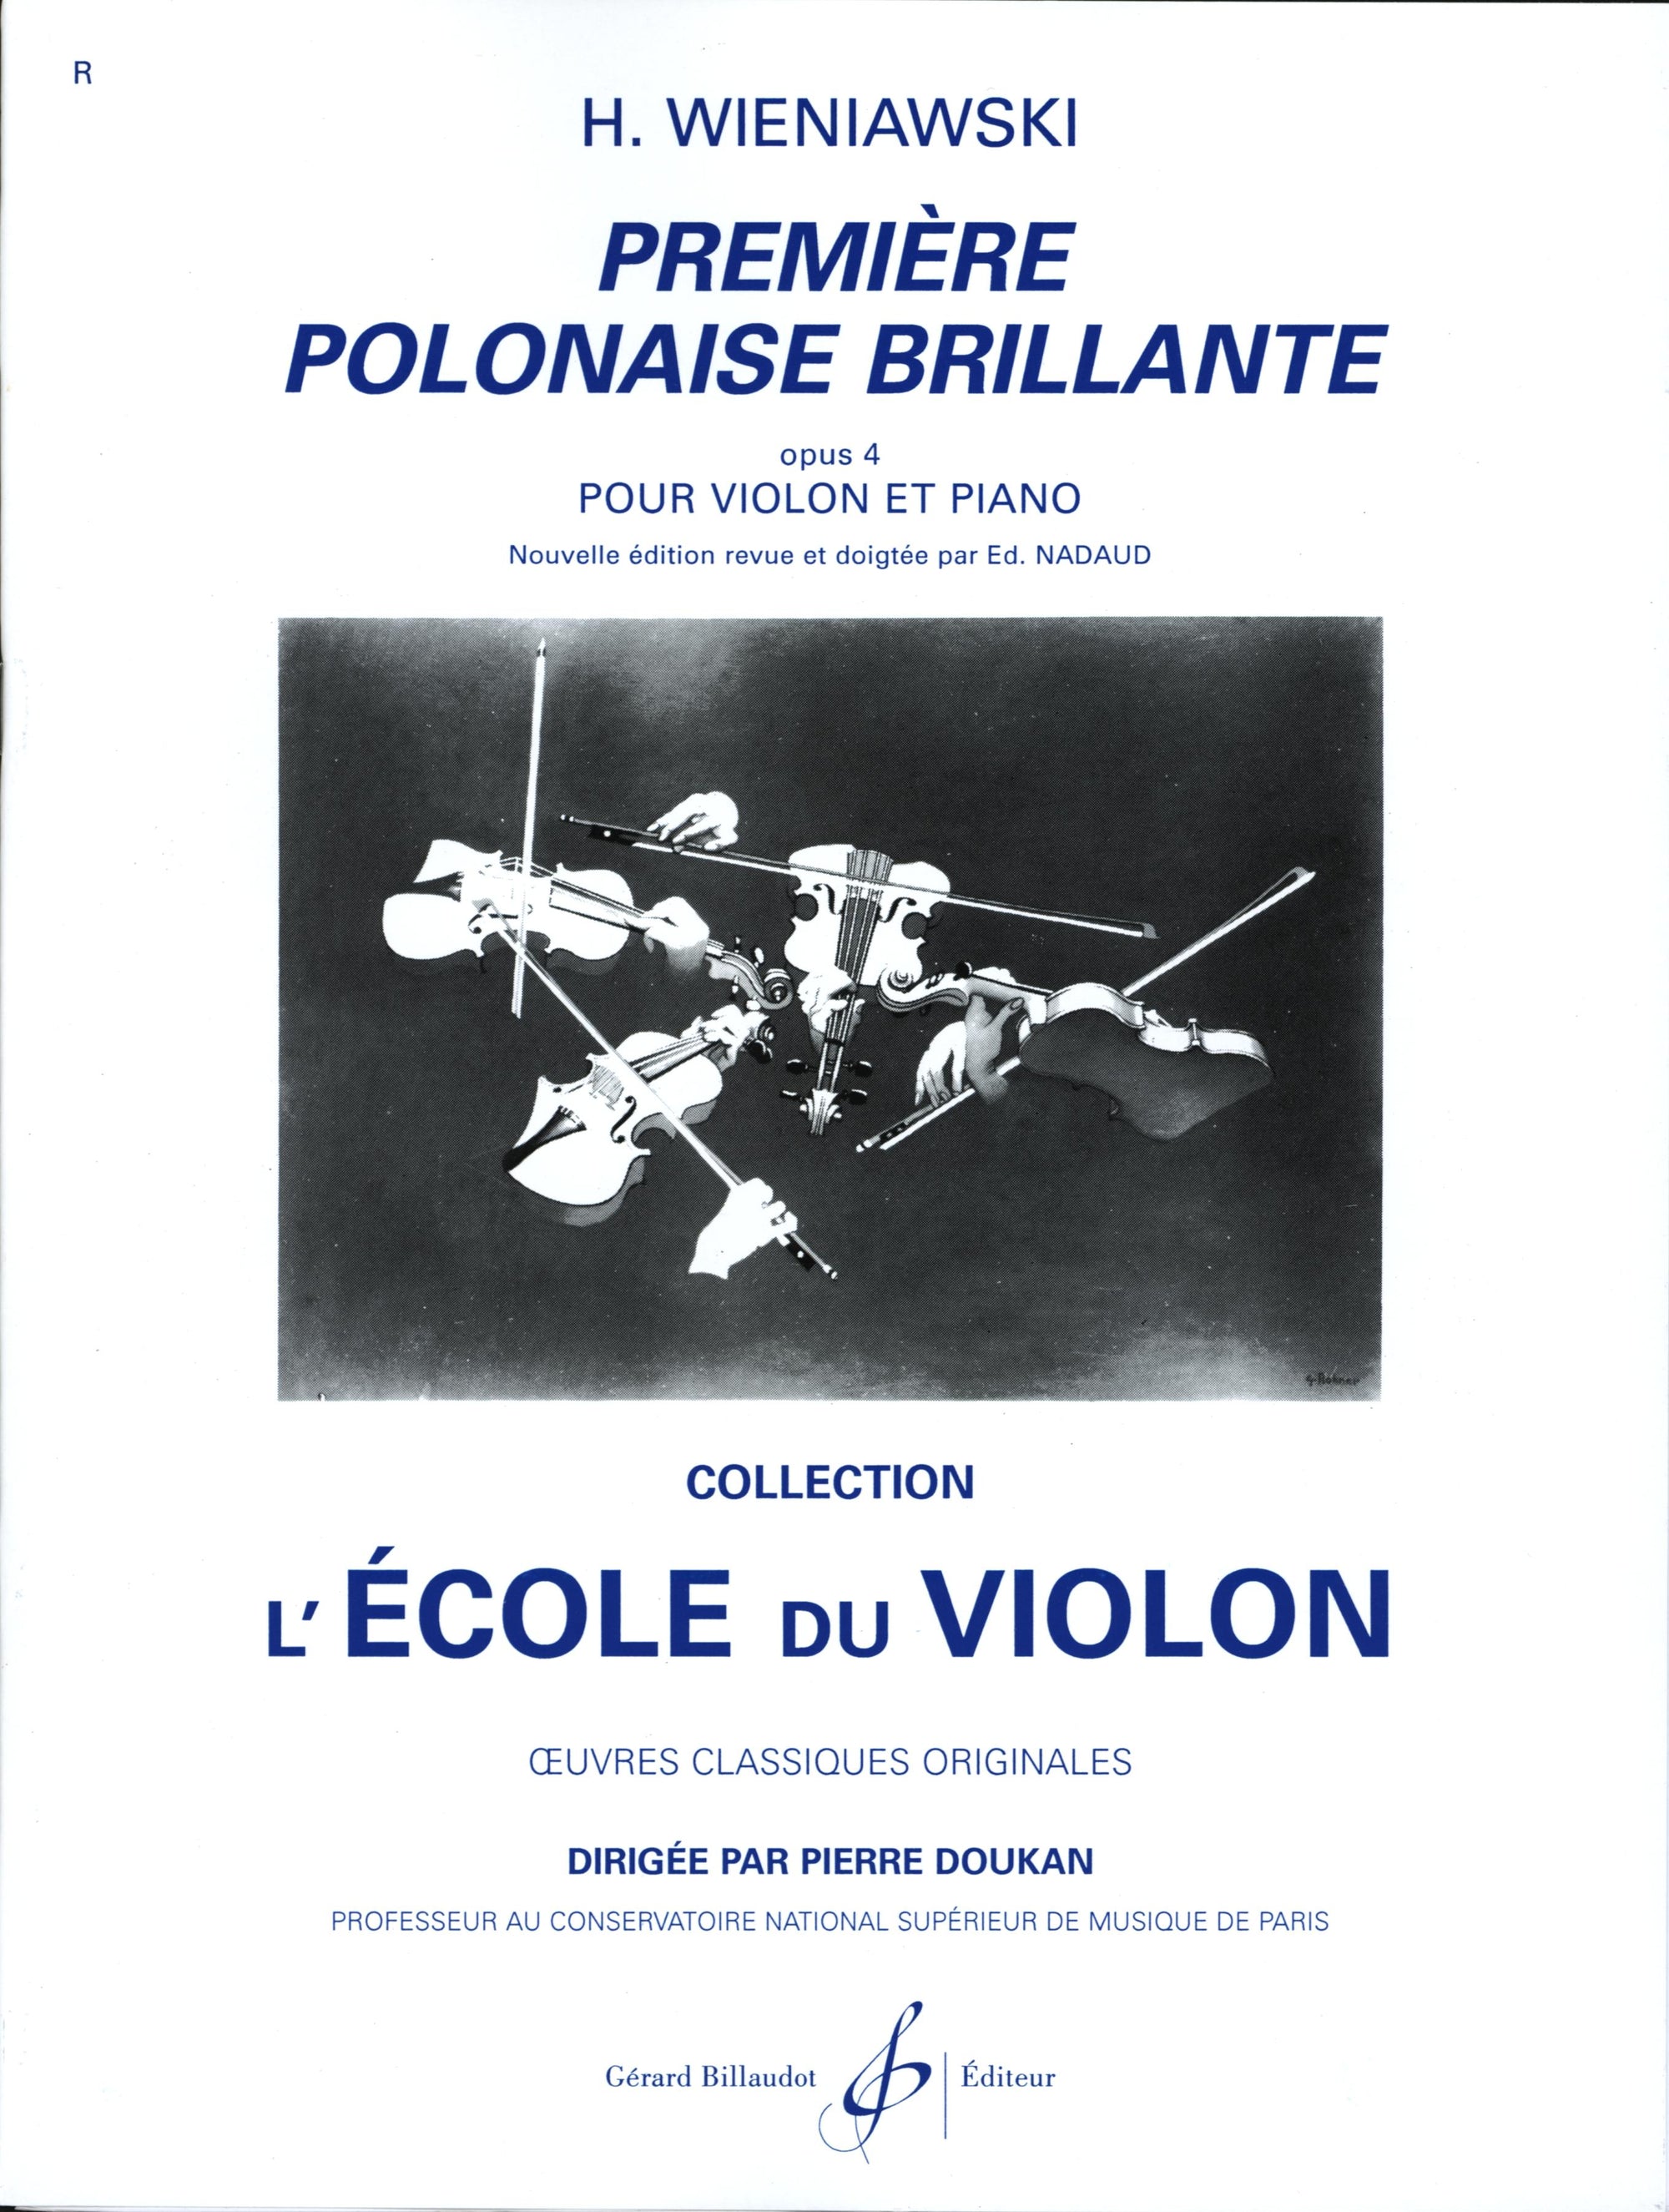 Wieniawski: Polonaise de concert No. 1, Op. 4